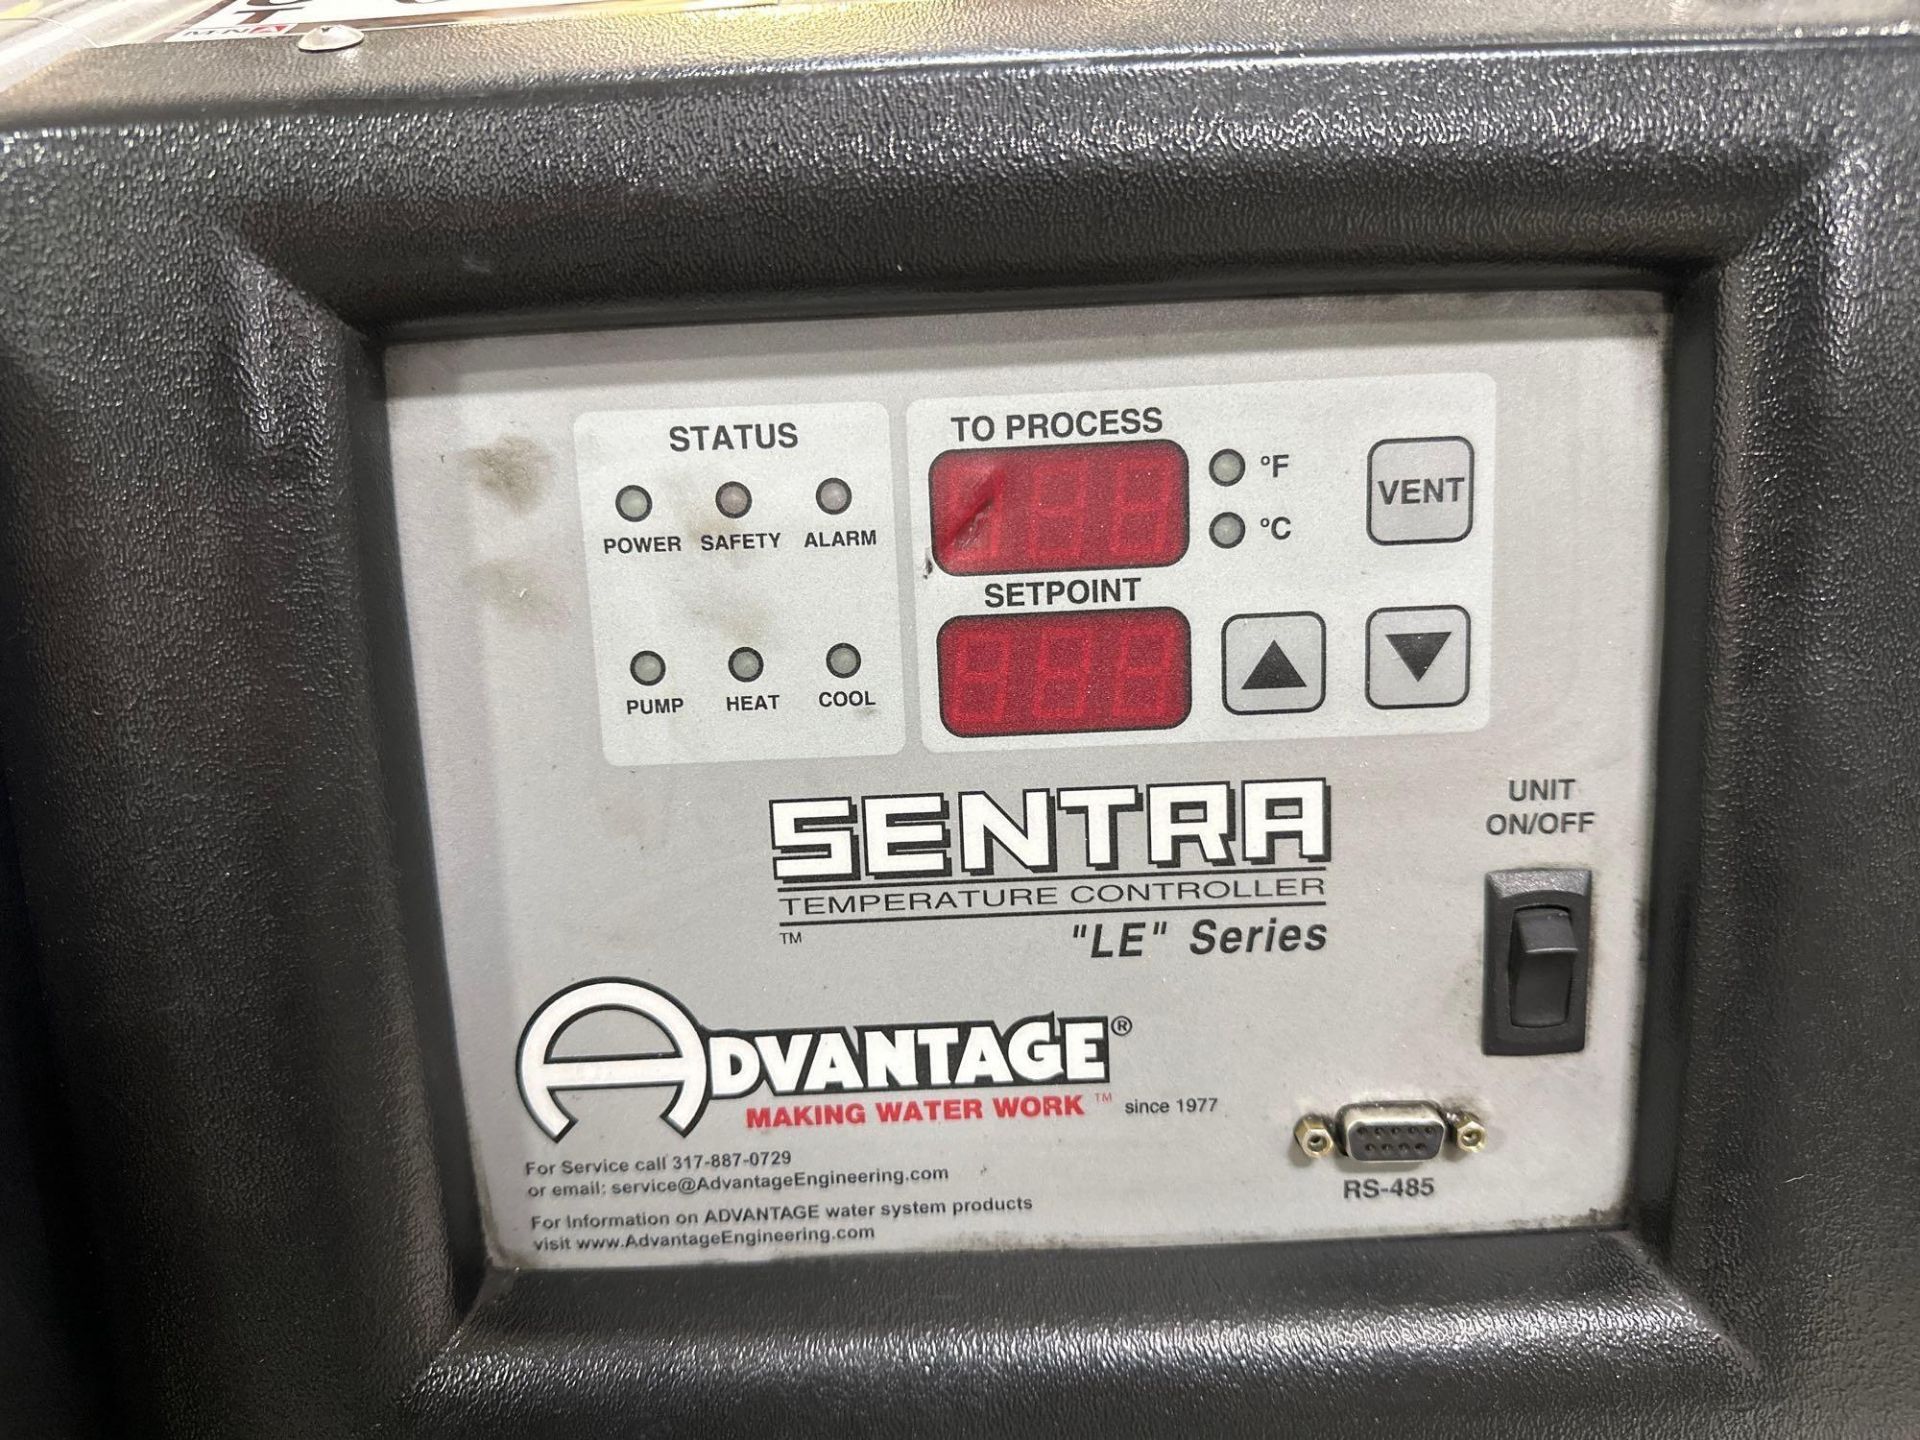 Advantage Sentra LE Series Thermolator - Image 2 of 3